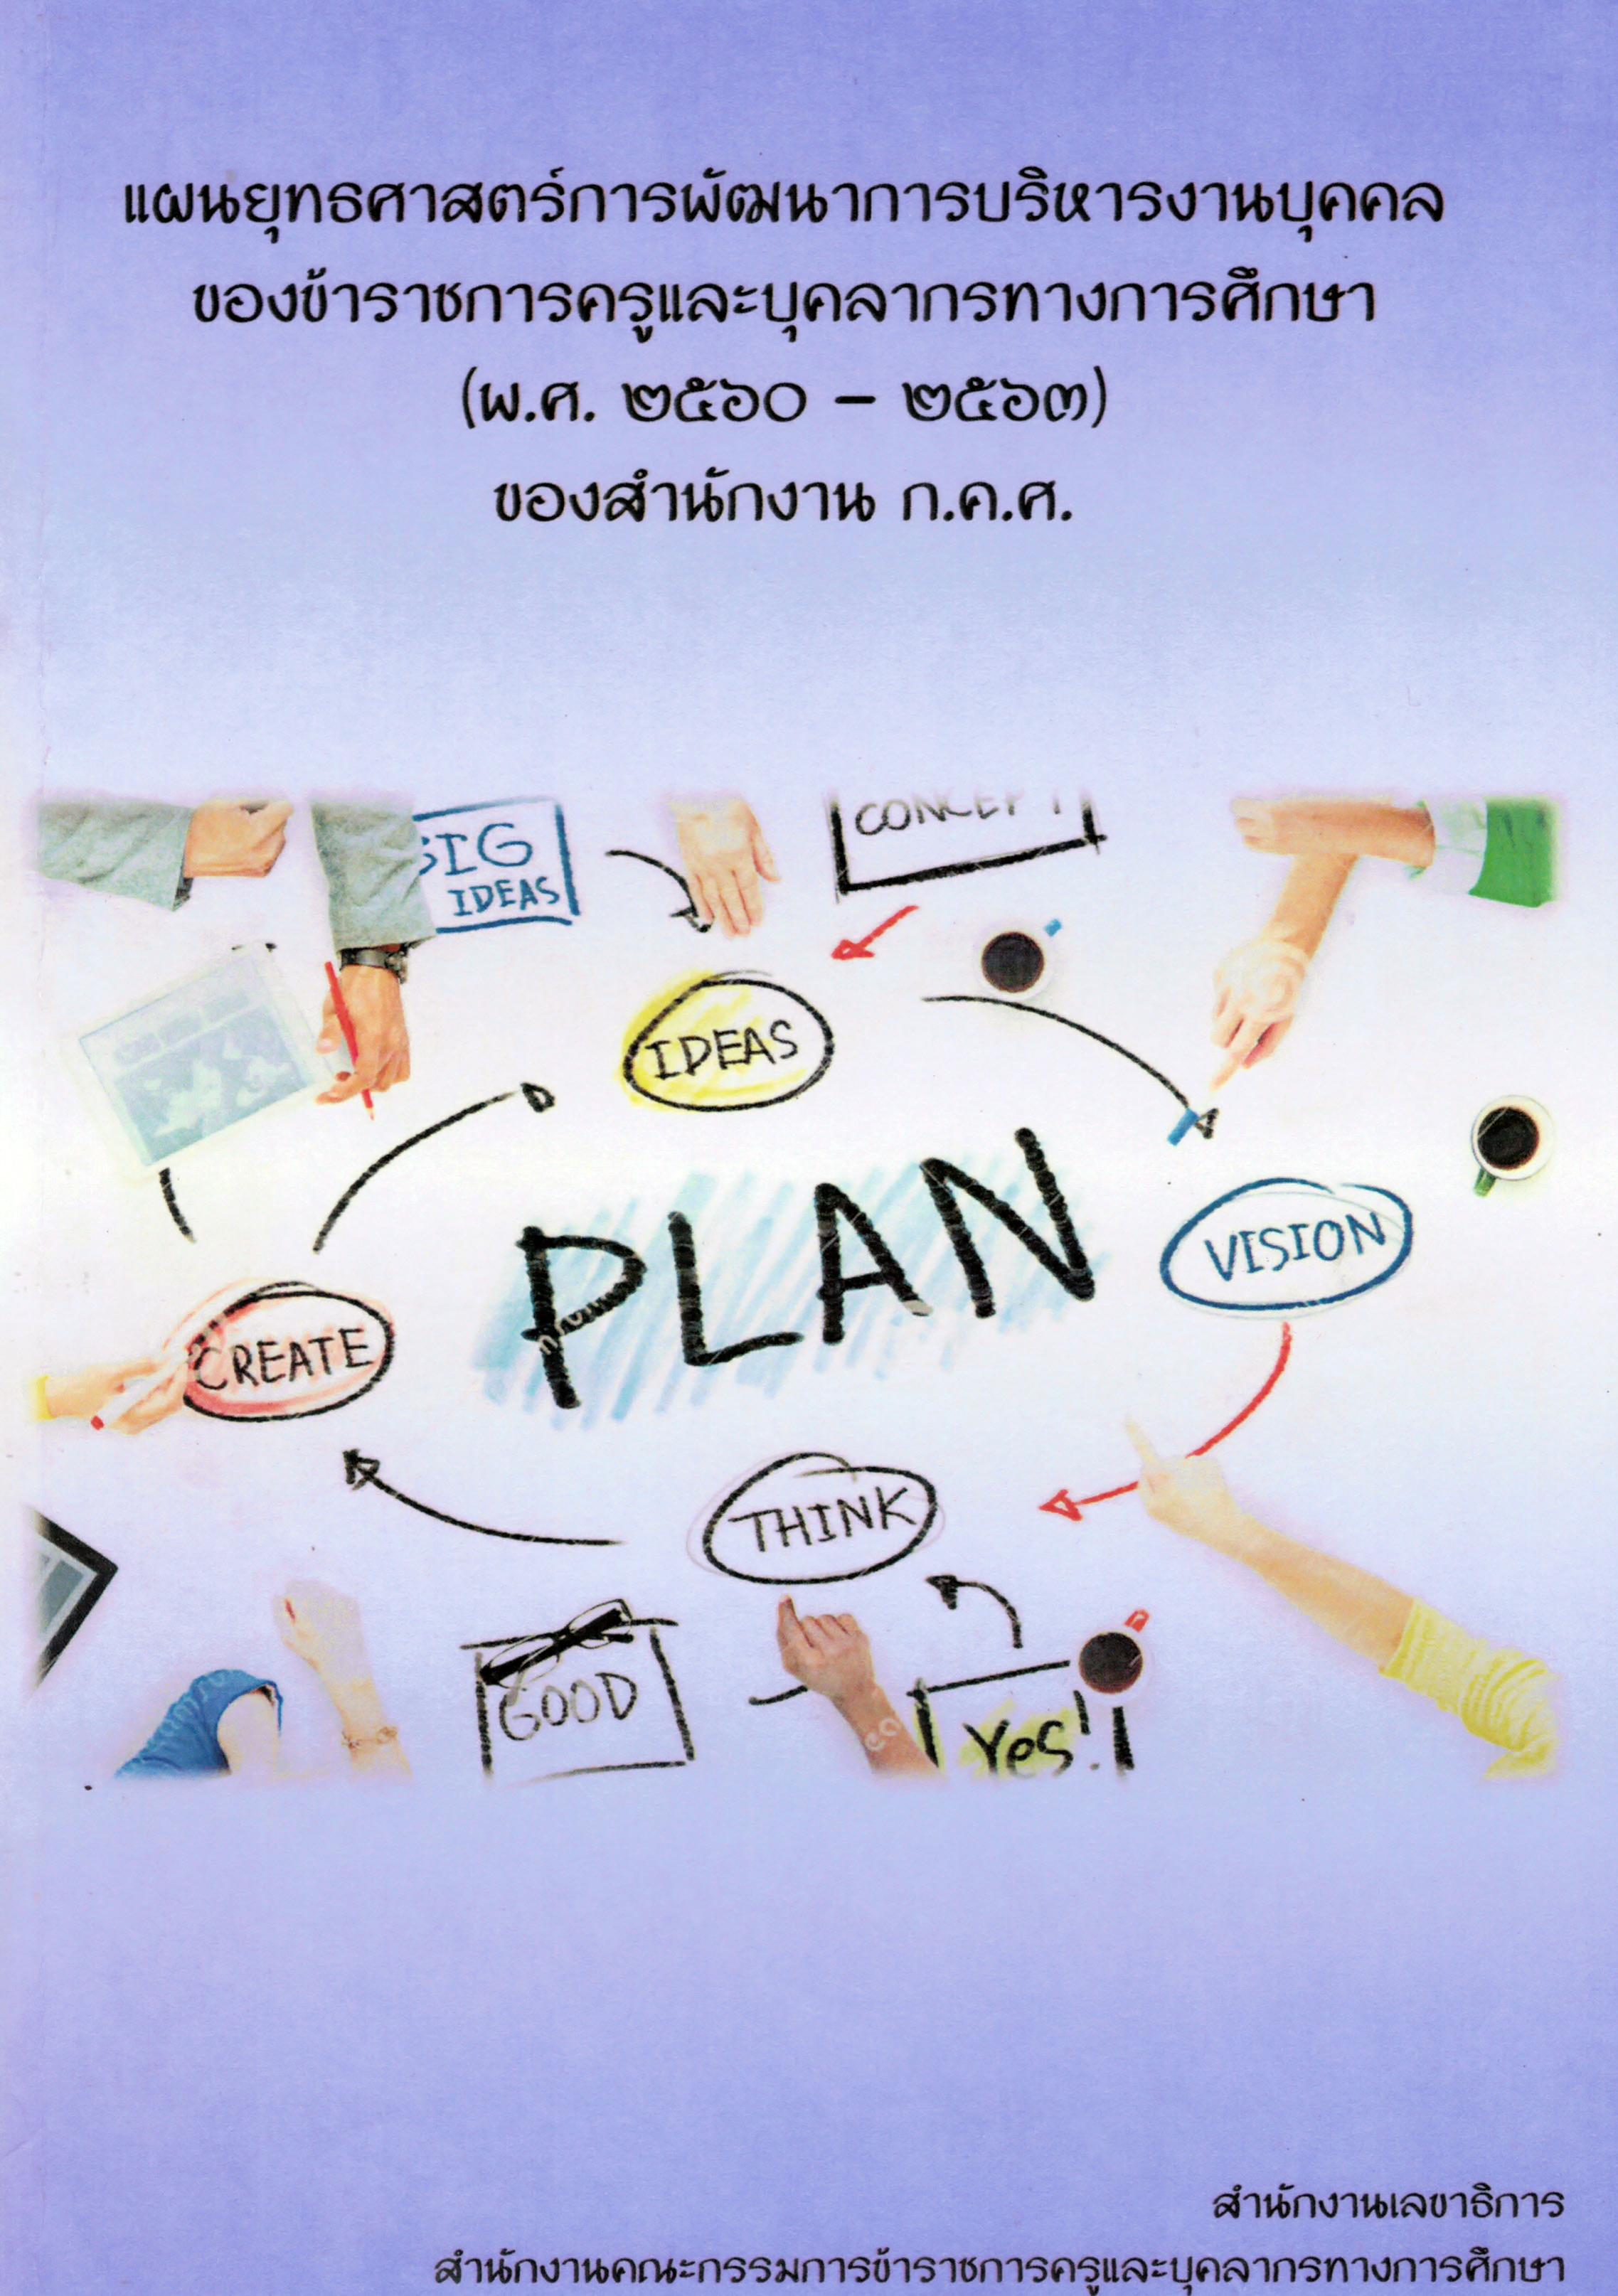 OTEPC Strategic Plan 2560 2563 cover